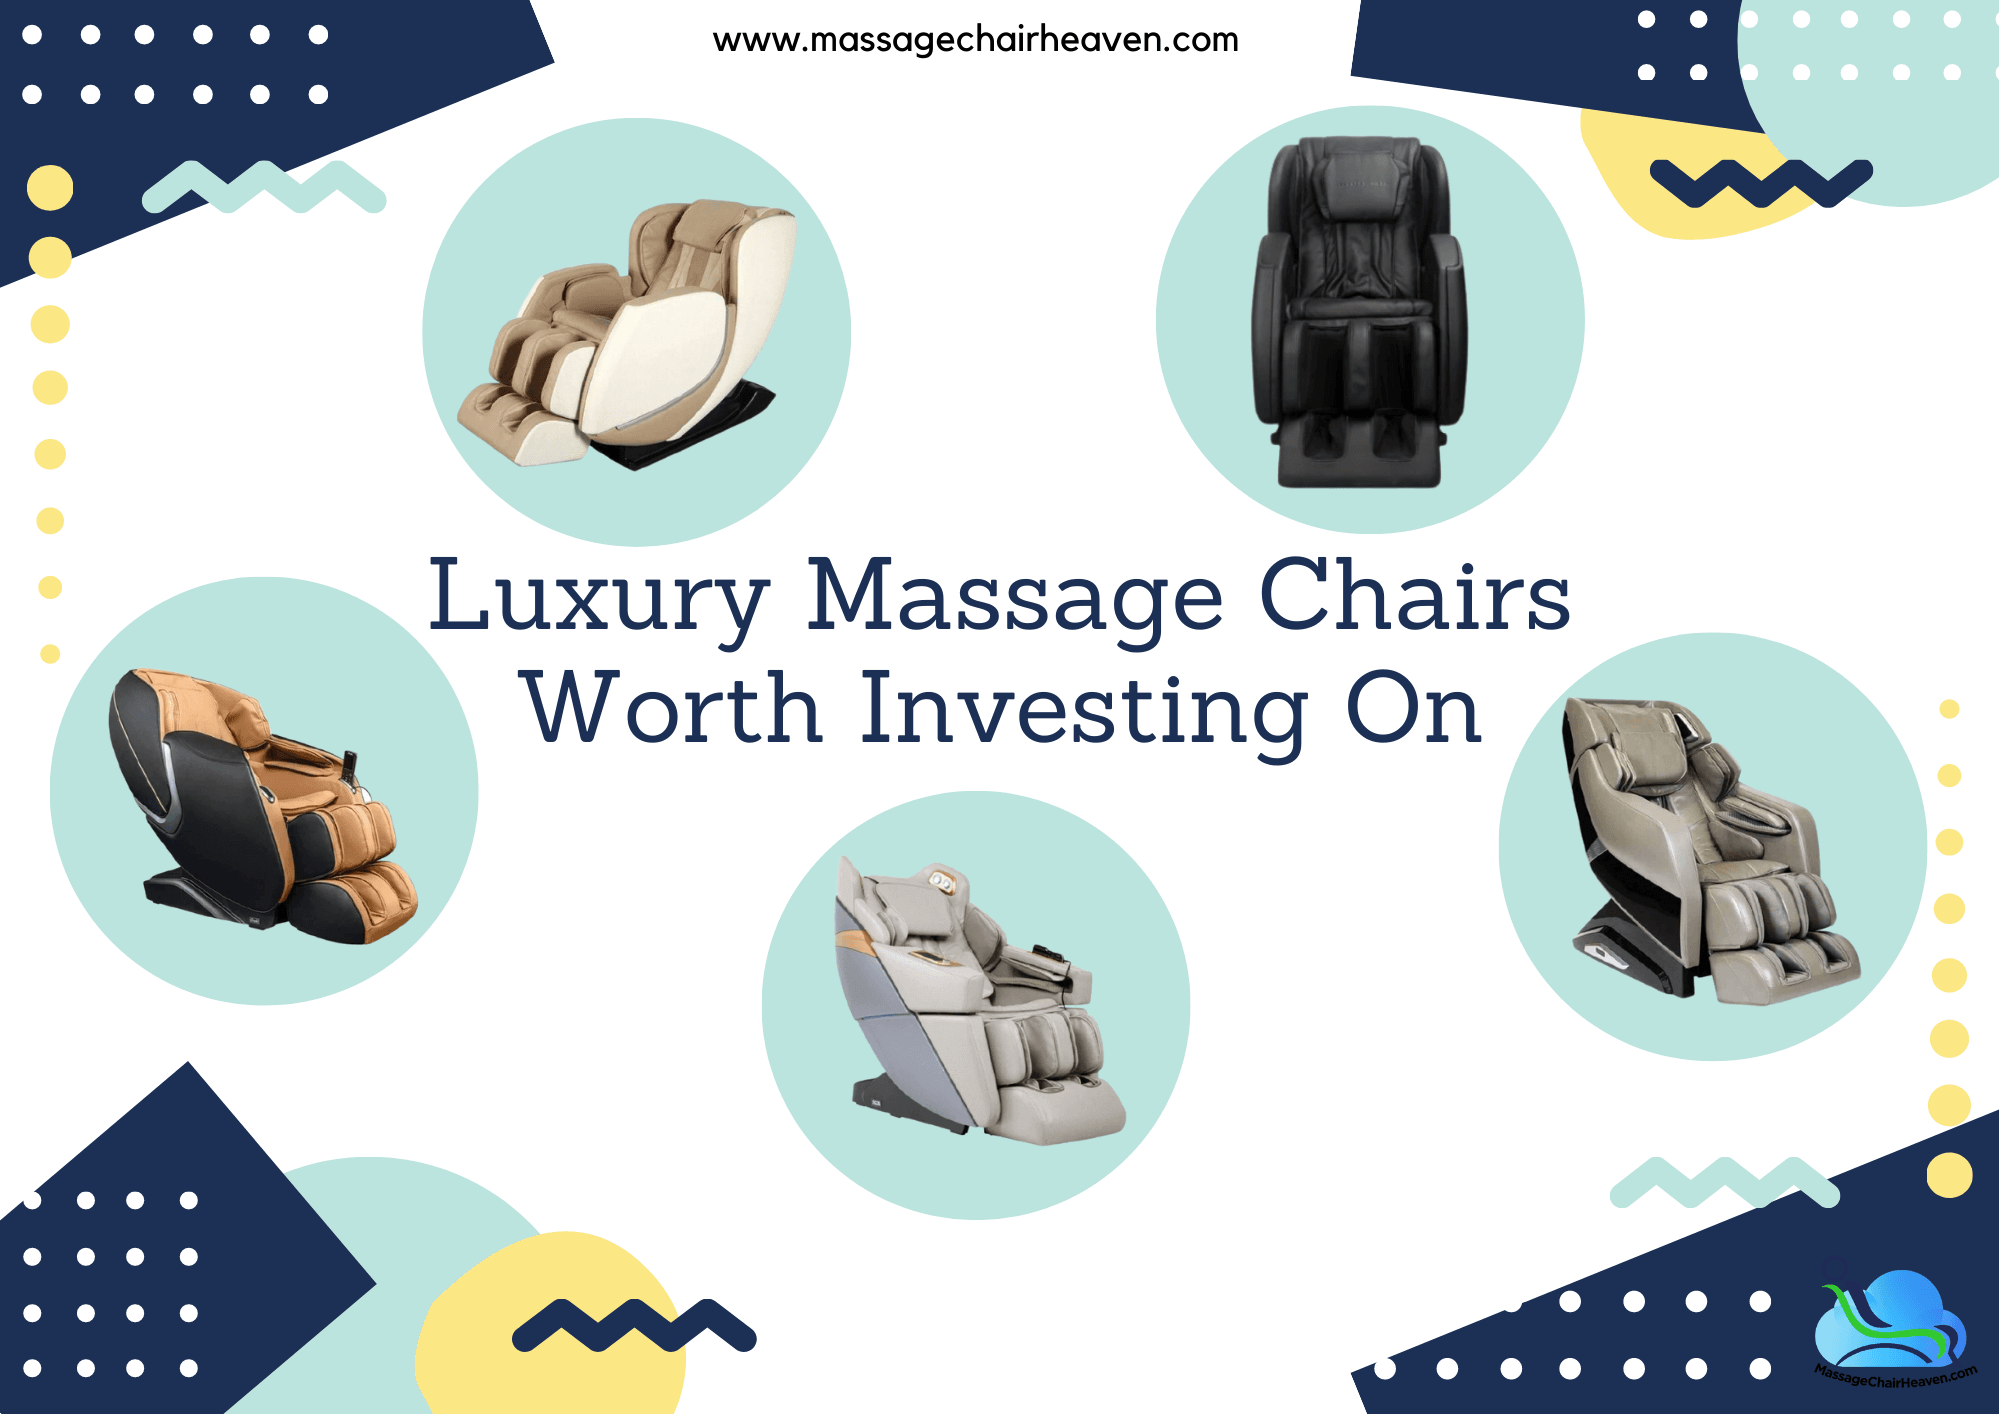 5 Luxury Massage Chairs Worth Investing On - Massage Chair Heaven